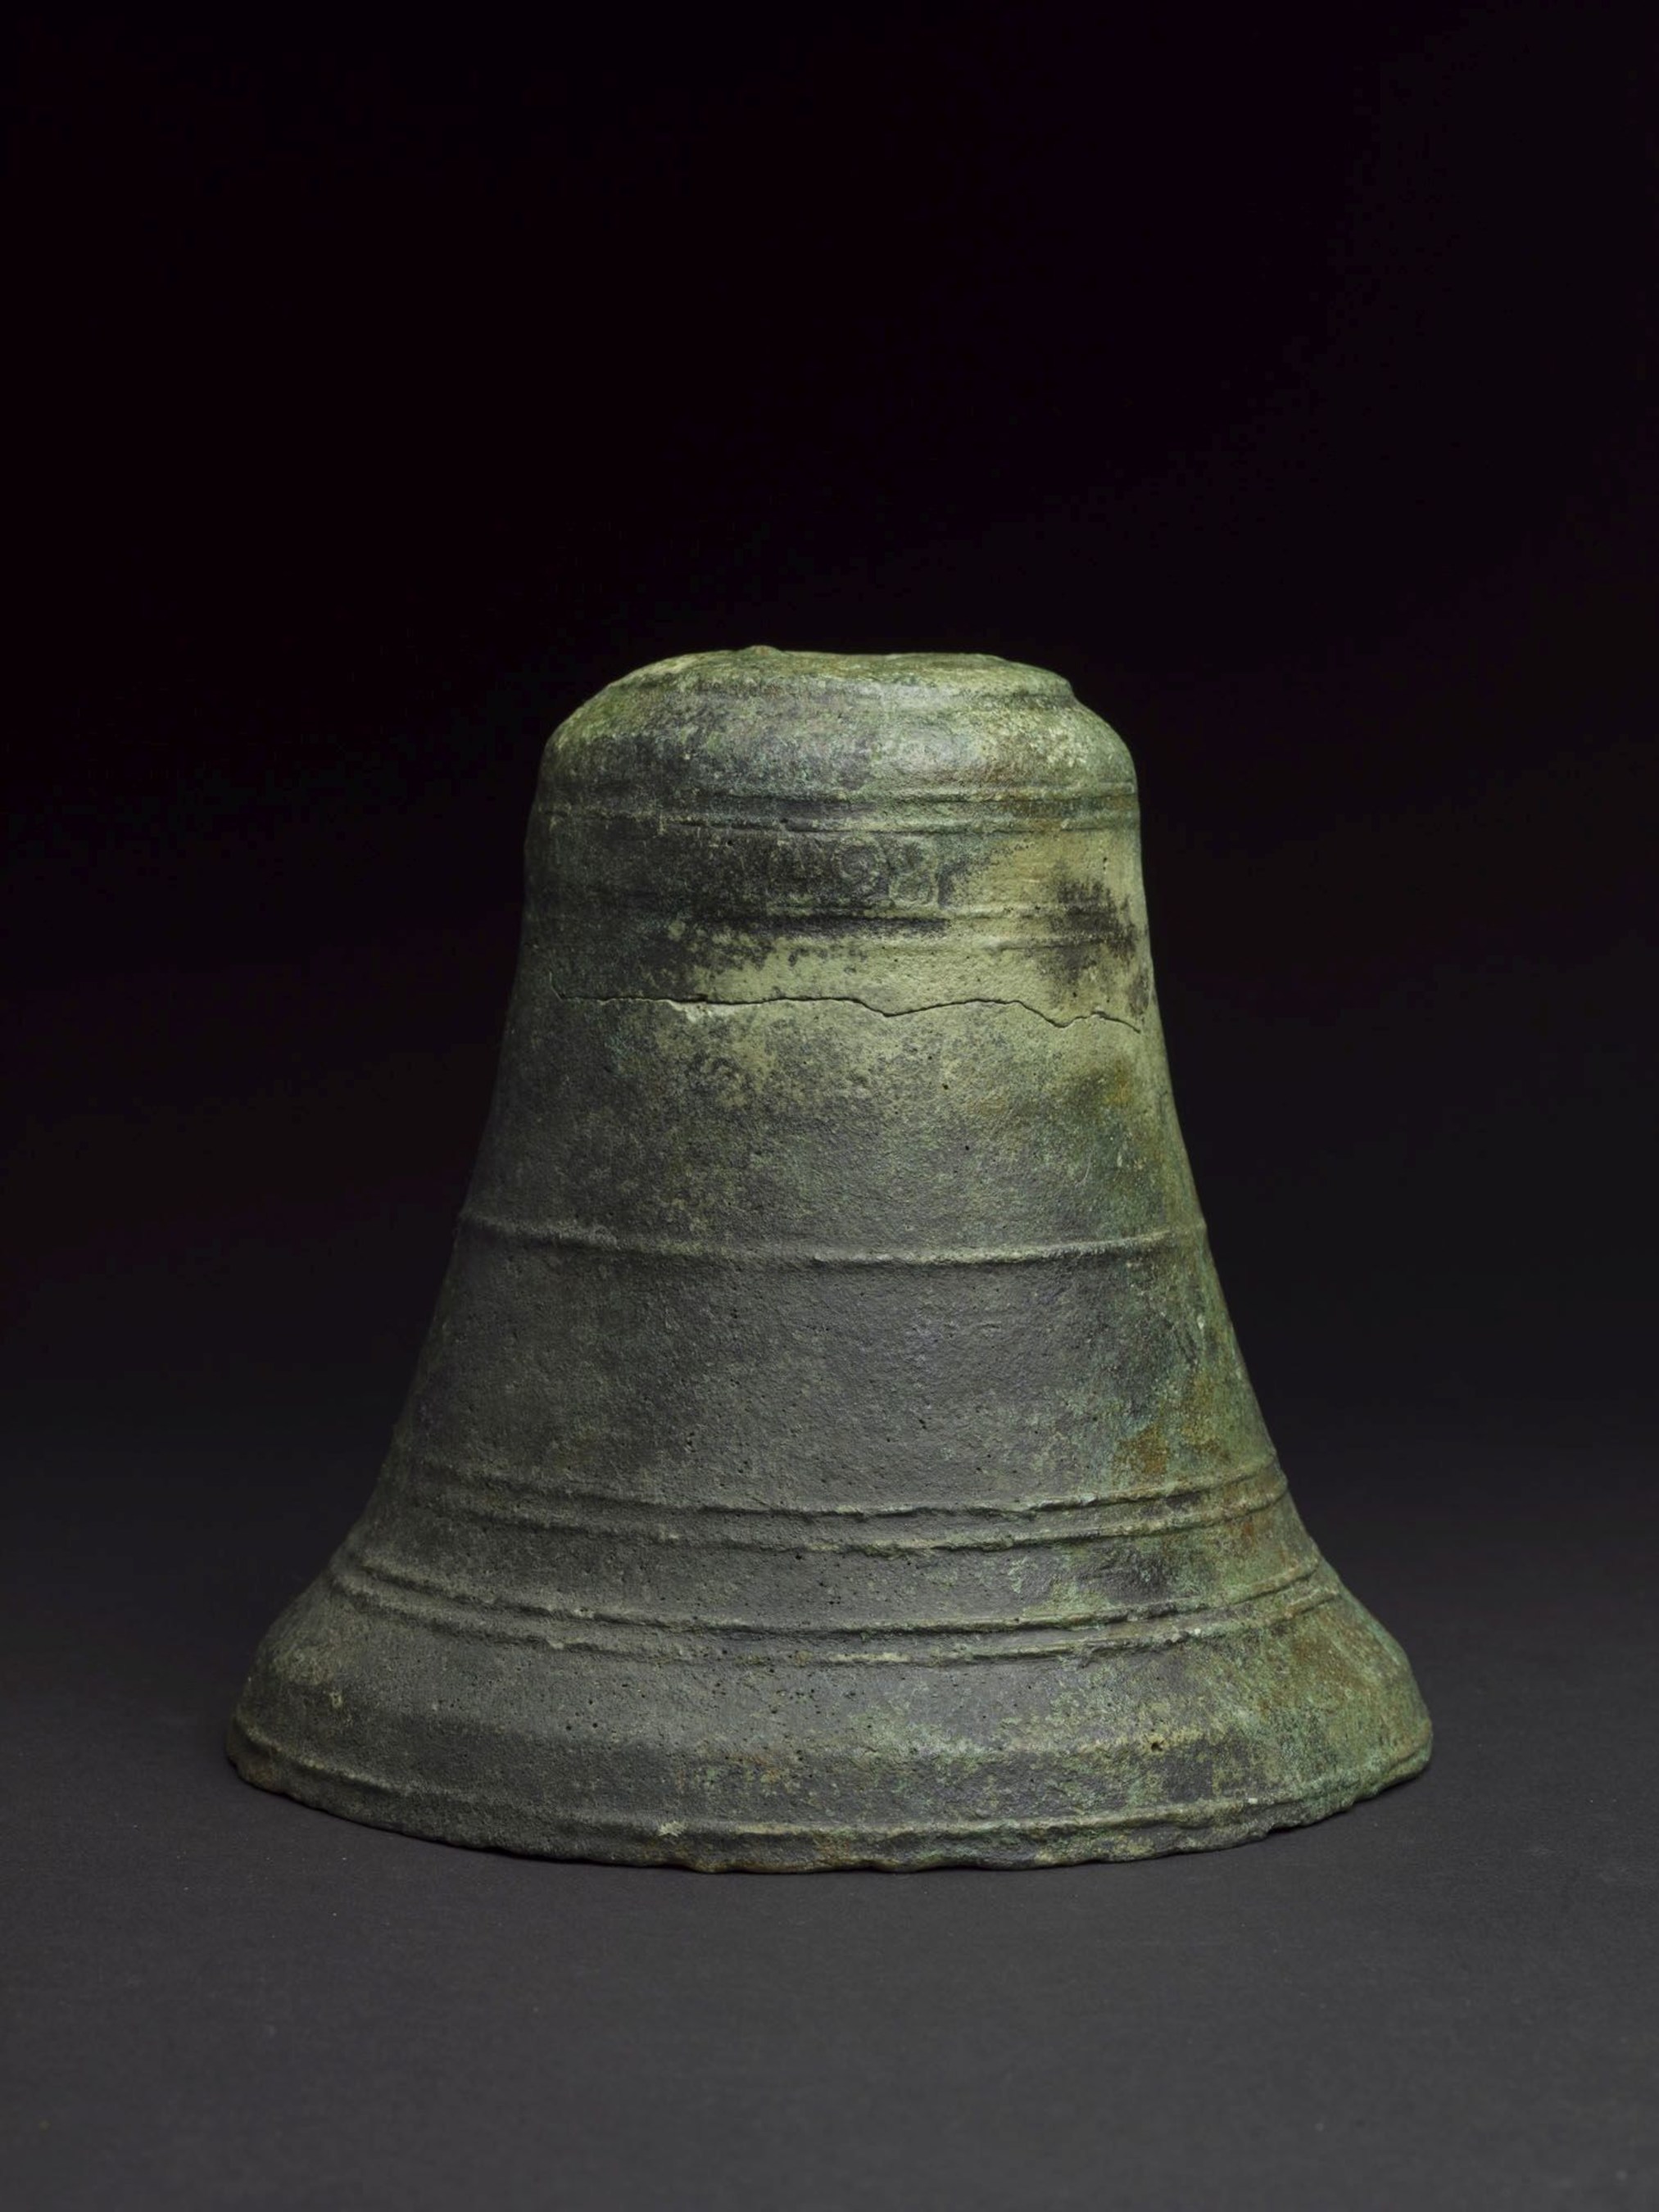 Ship's bell dated 1498 (PRNewsFoto/Oman's Ministry of Heritage) (PRNewsFoto/Oman's Ministry of Heritage)